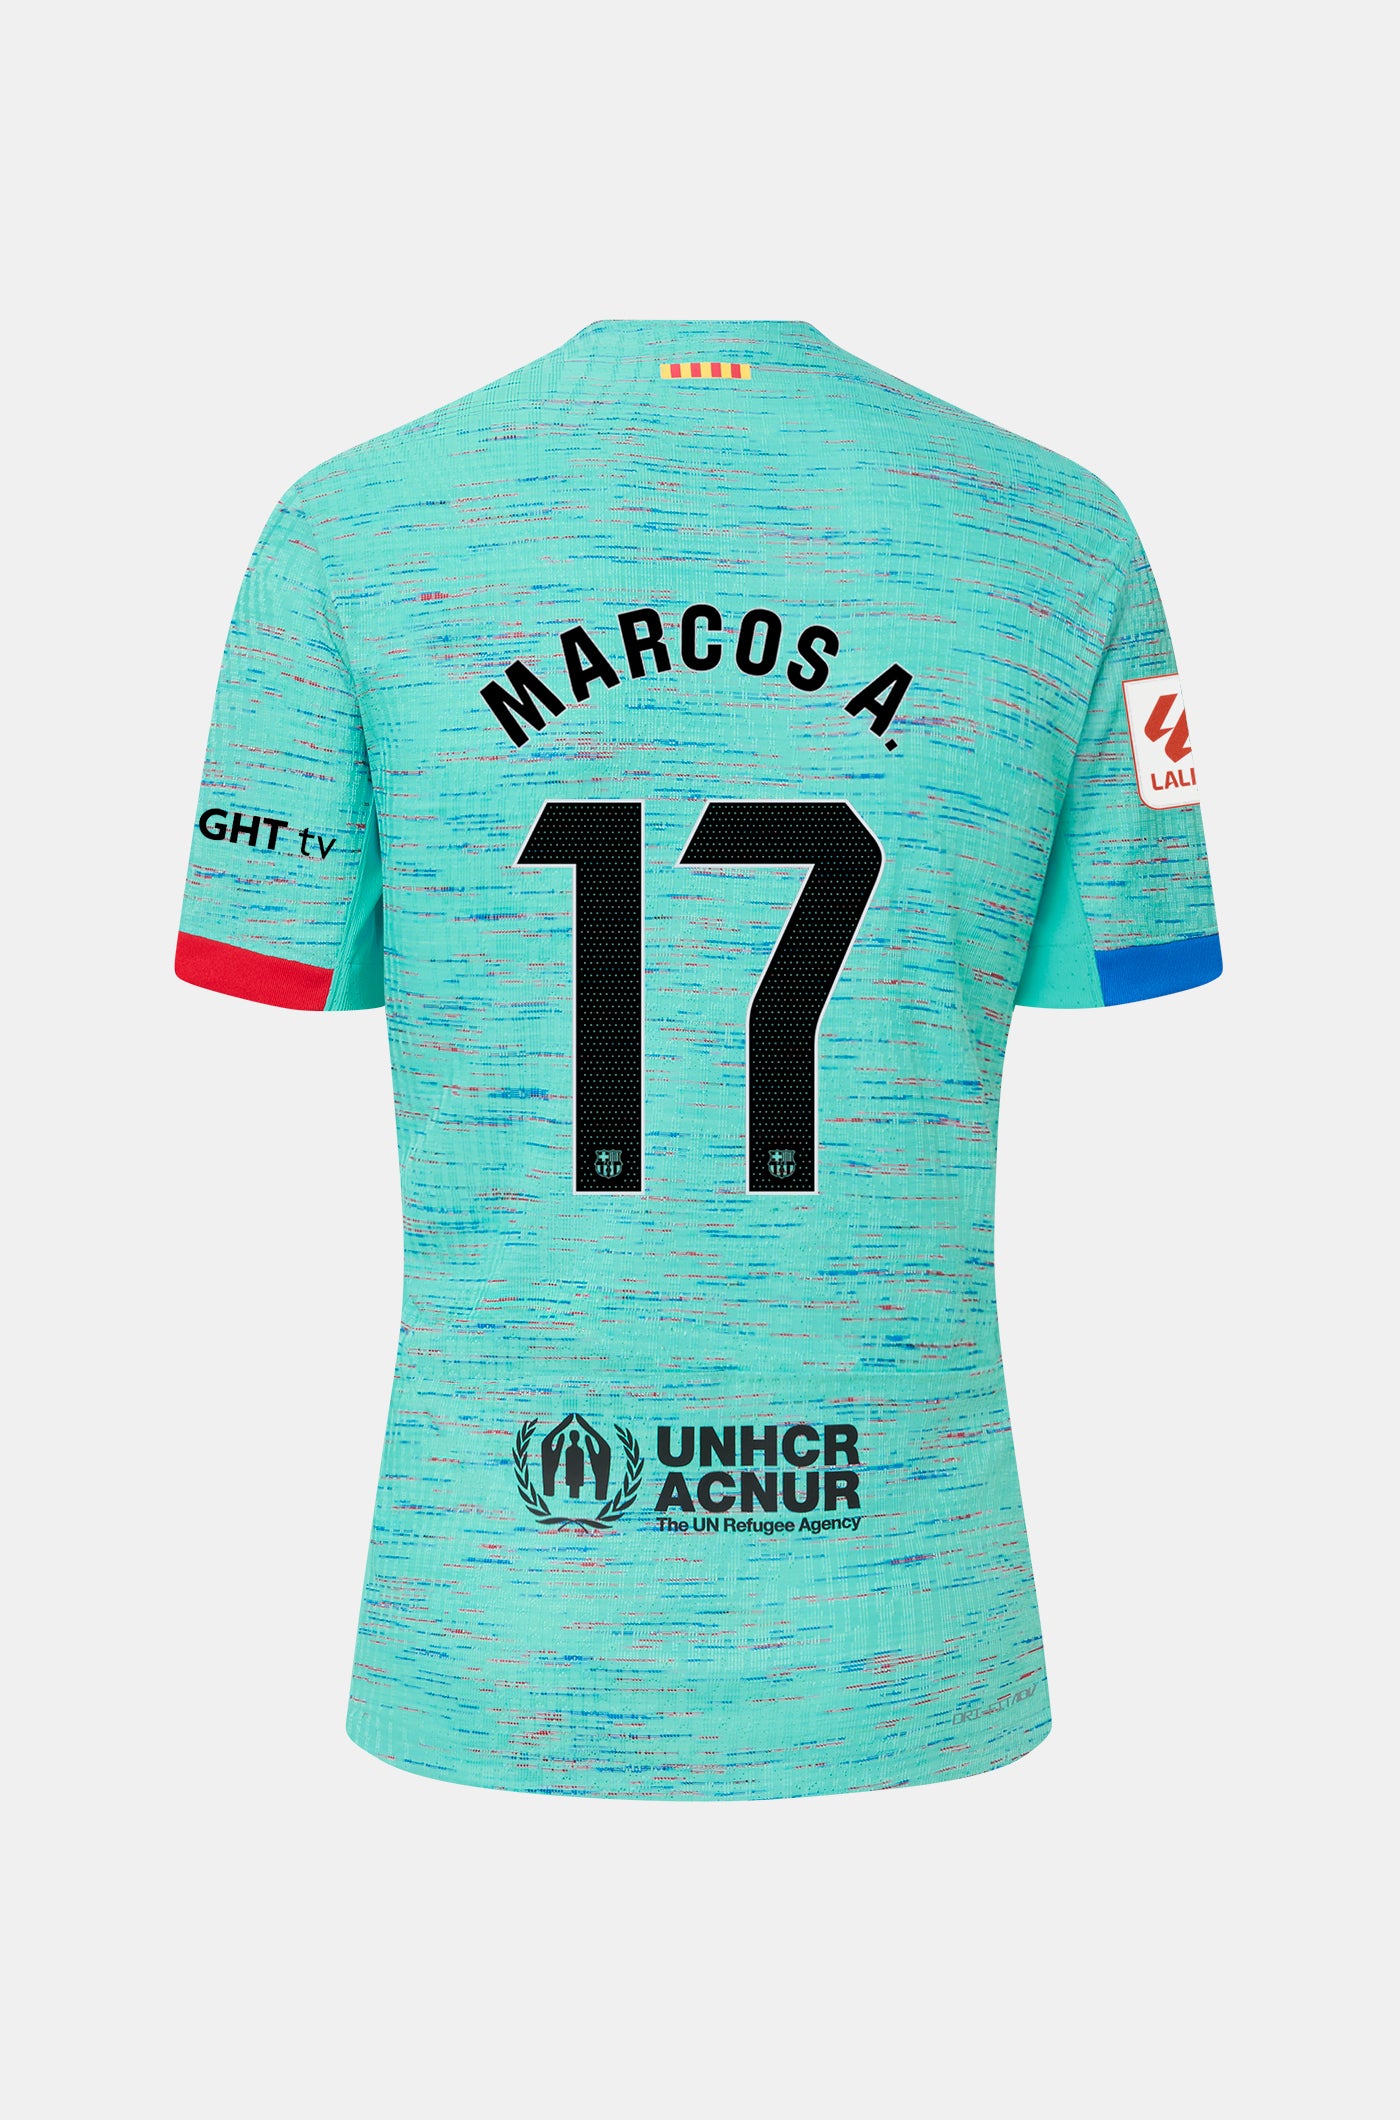 LFP FC Barcelona third shirt 23/24 Player’s Edition  - MARCOS A.